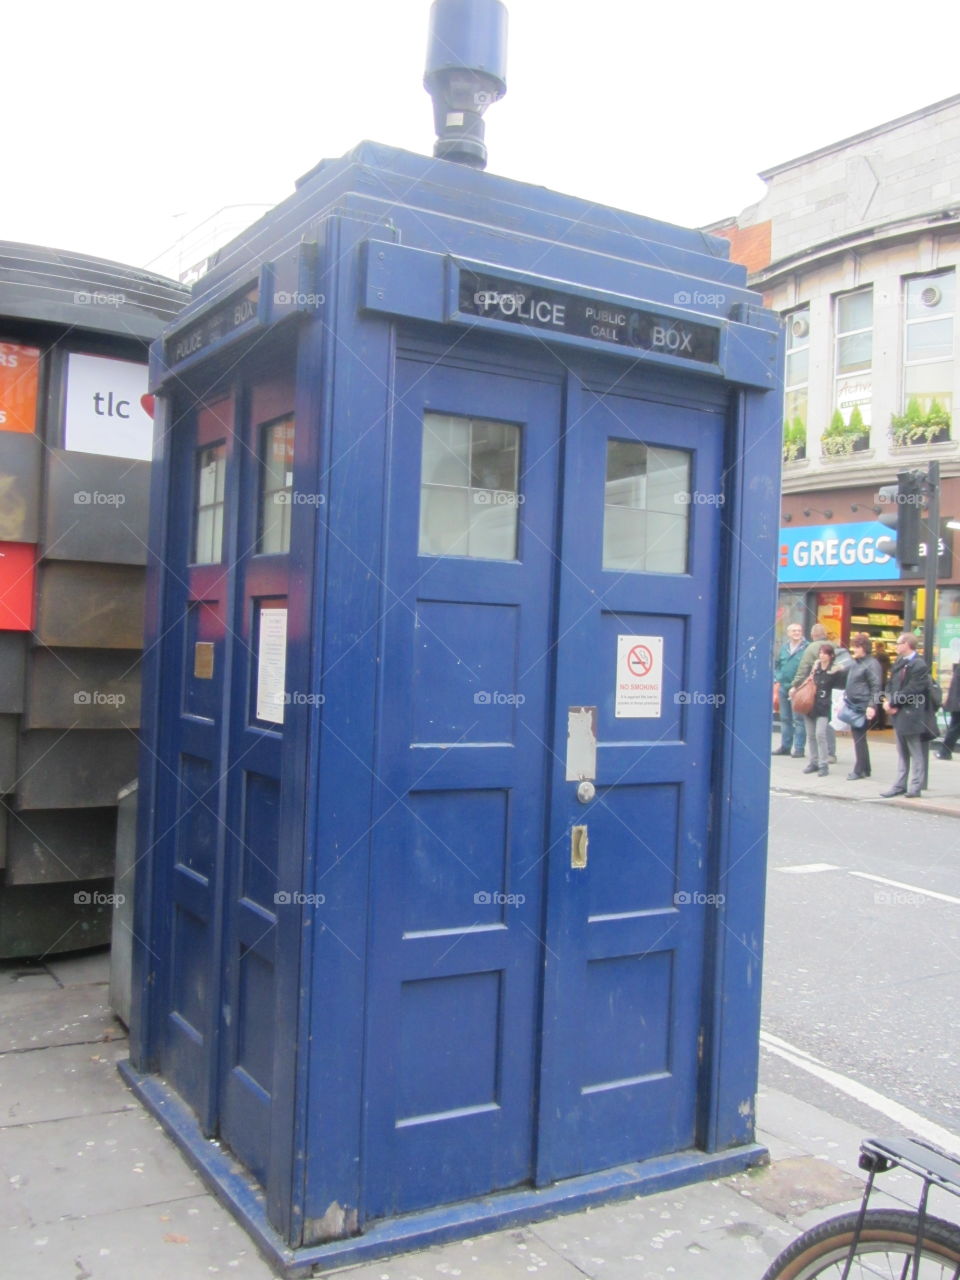 TARDIS in London